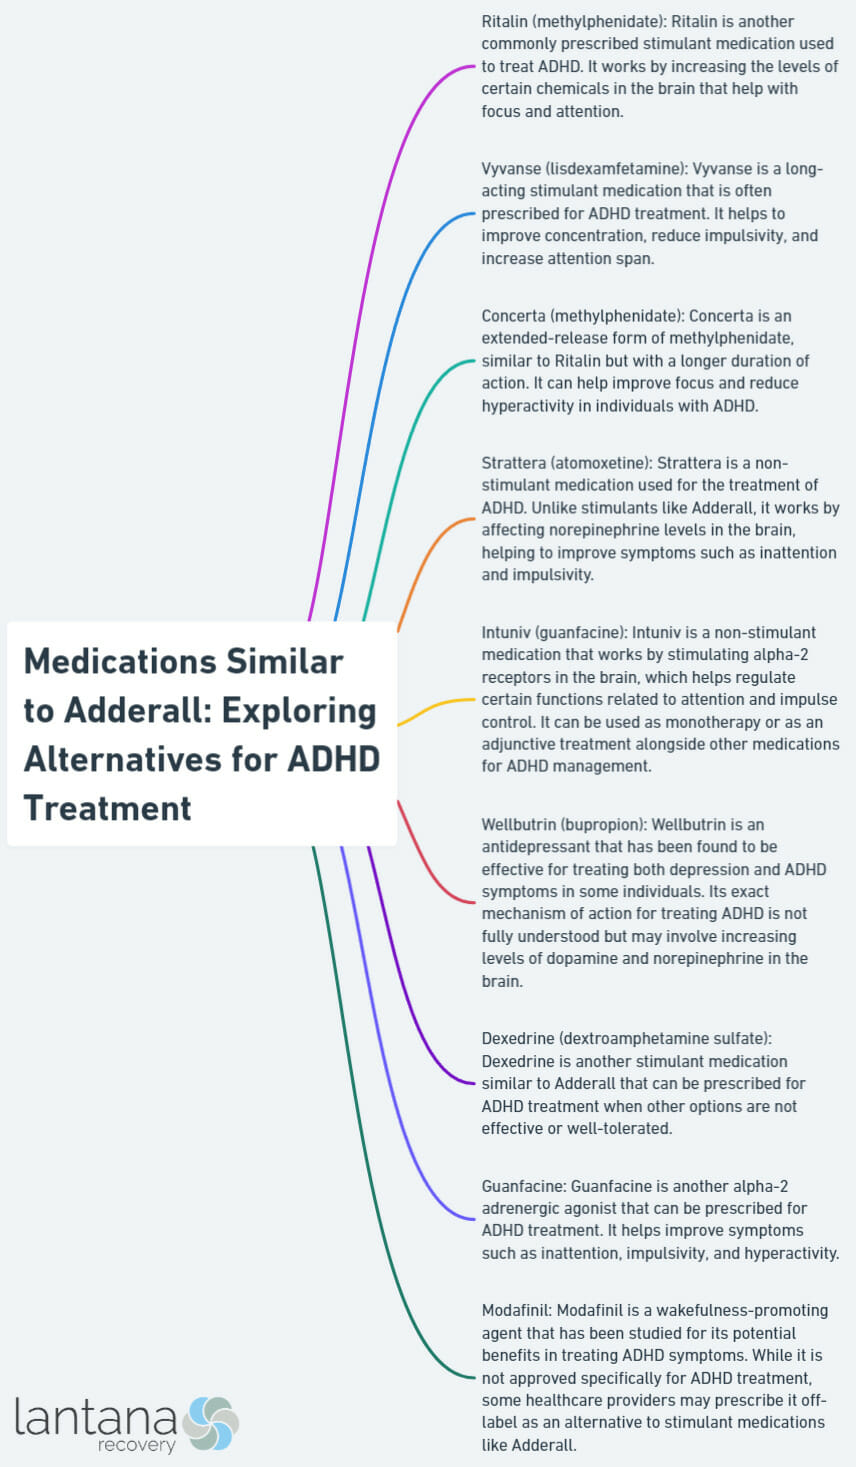 Medications Similar to Adderall: Exploring Alternatives for ADHD Treatment